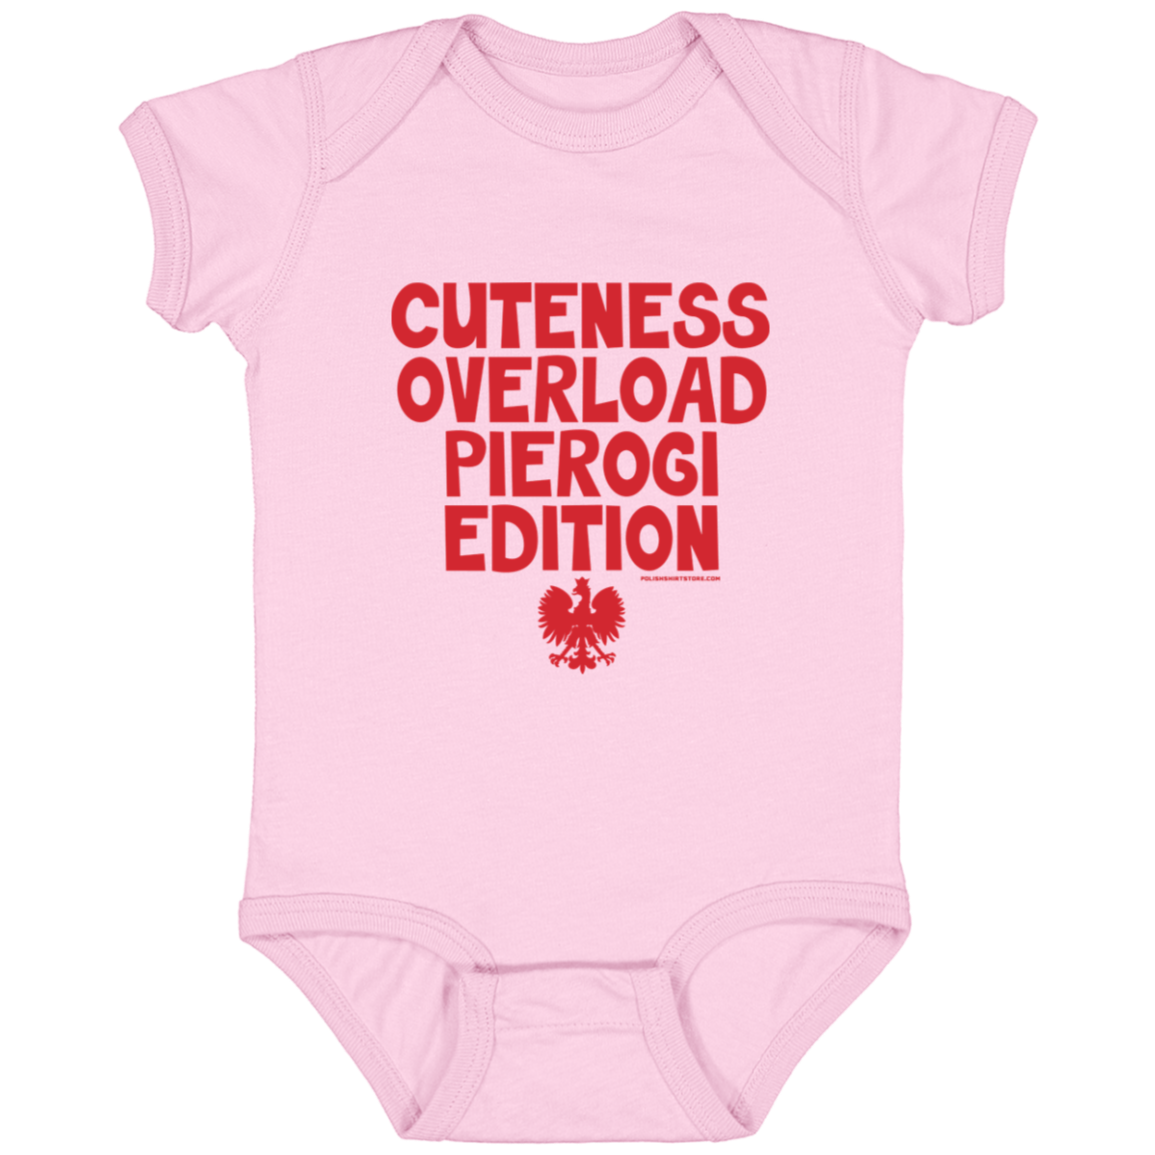 Cuteness Overlaod Pierogi Edition Infant Bodysuit Baby CustomCat Pink Newborn 